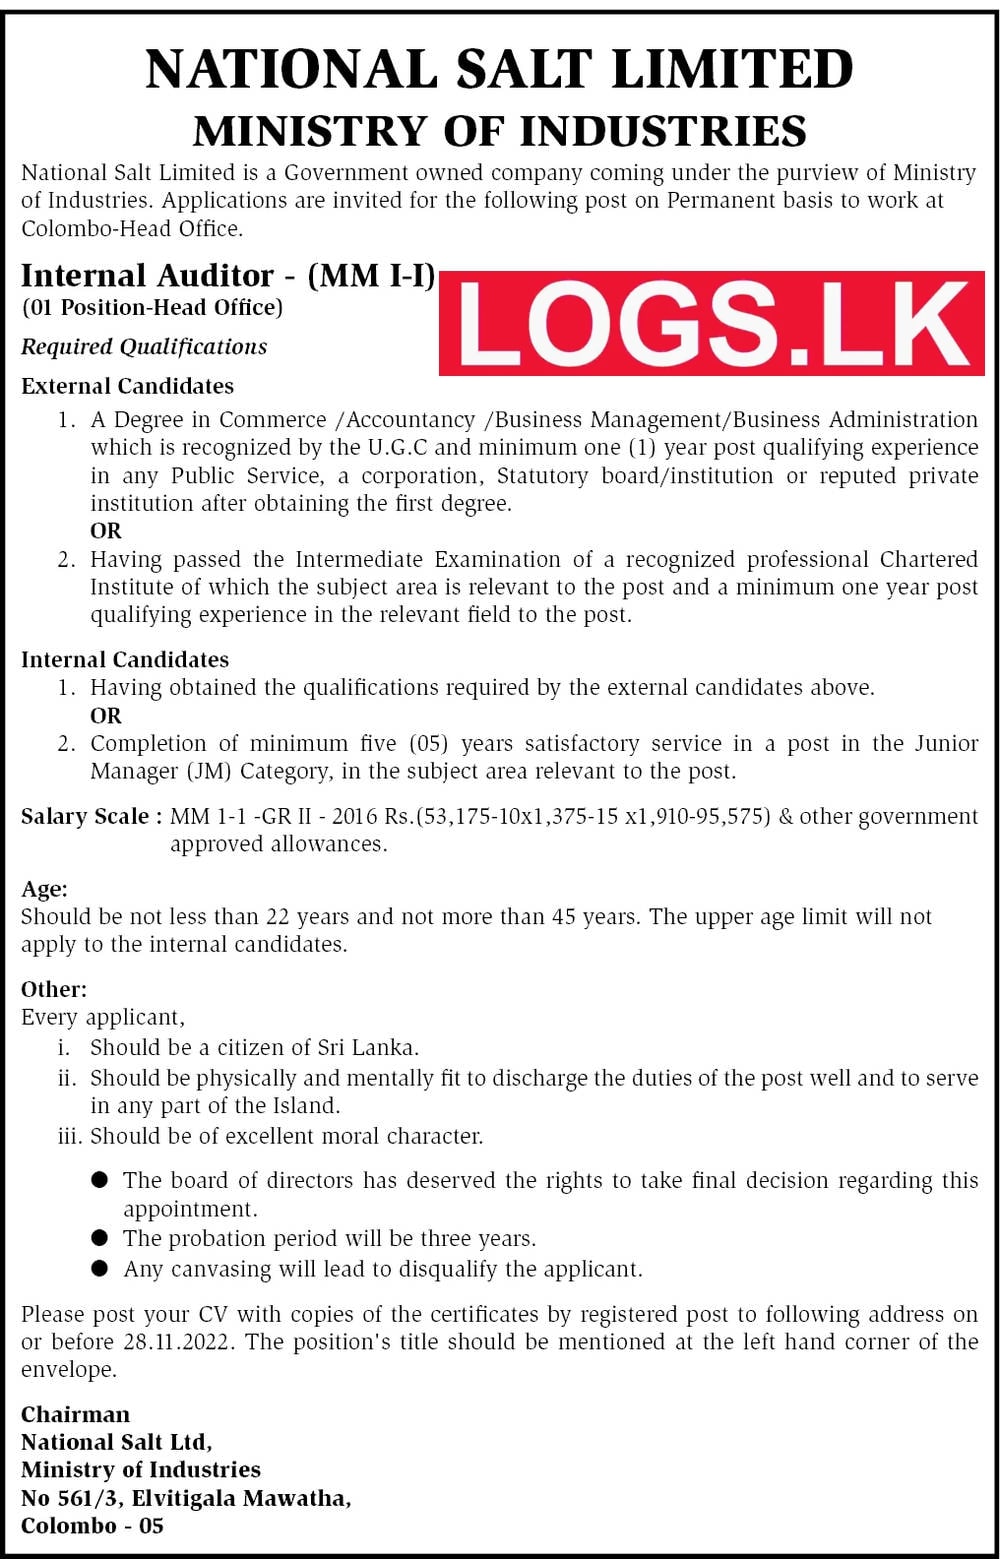 Internal Auditor Job Vacancy in National Salt Limited Jobs Vacancies Details, Application Form Download